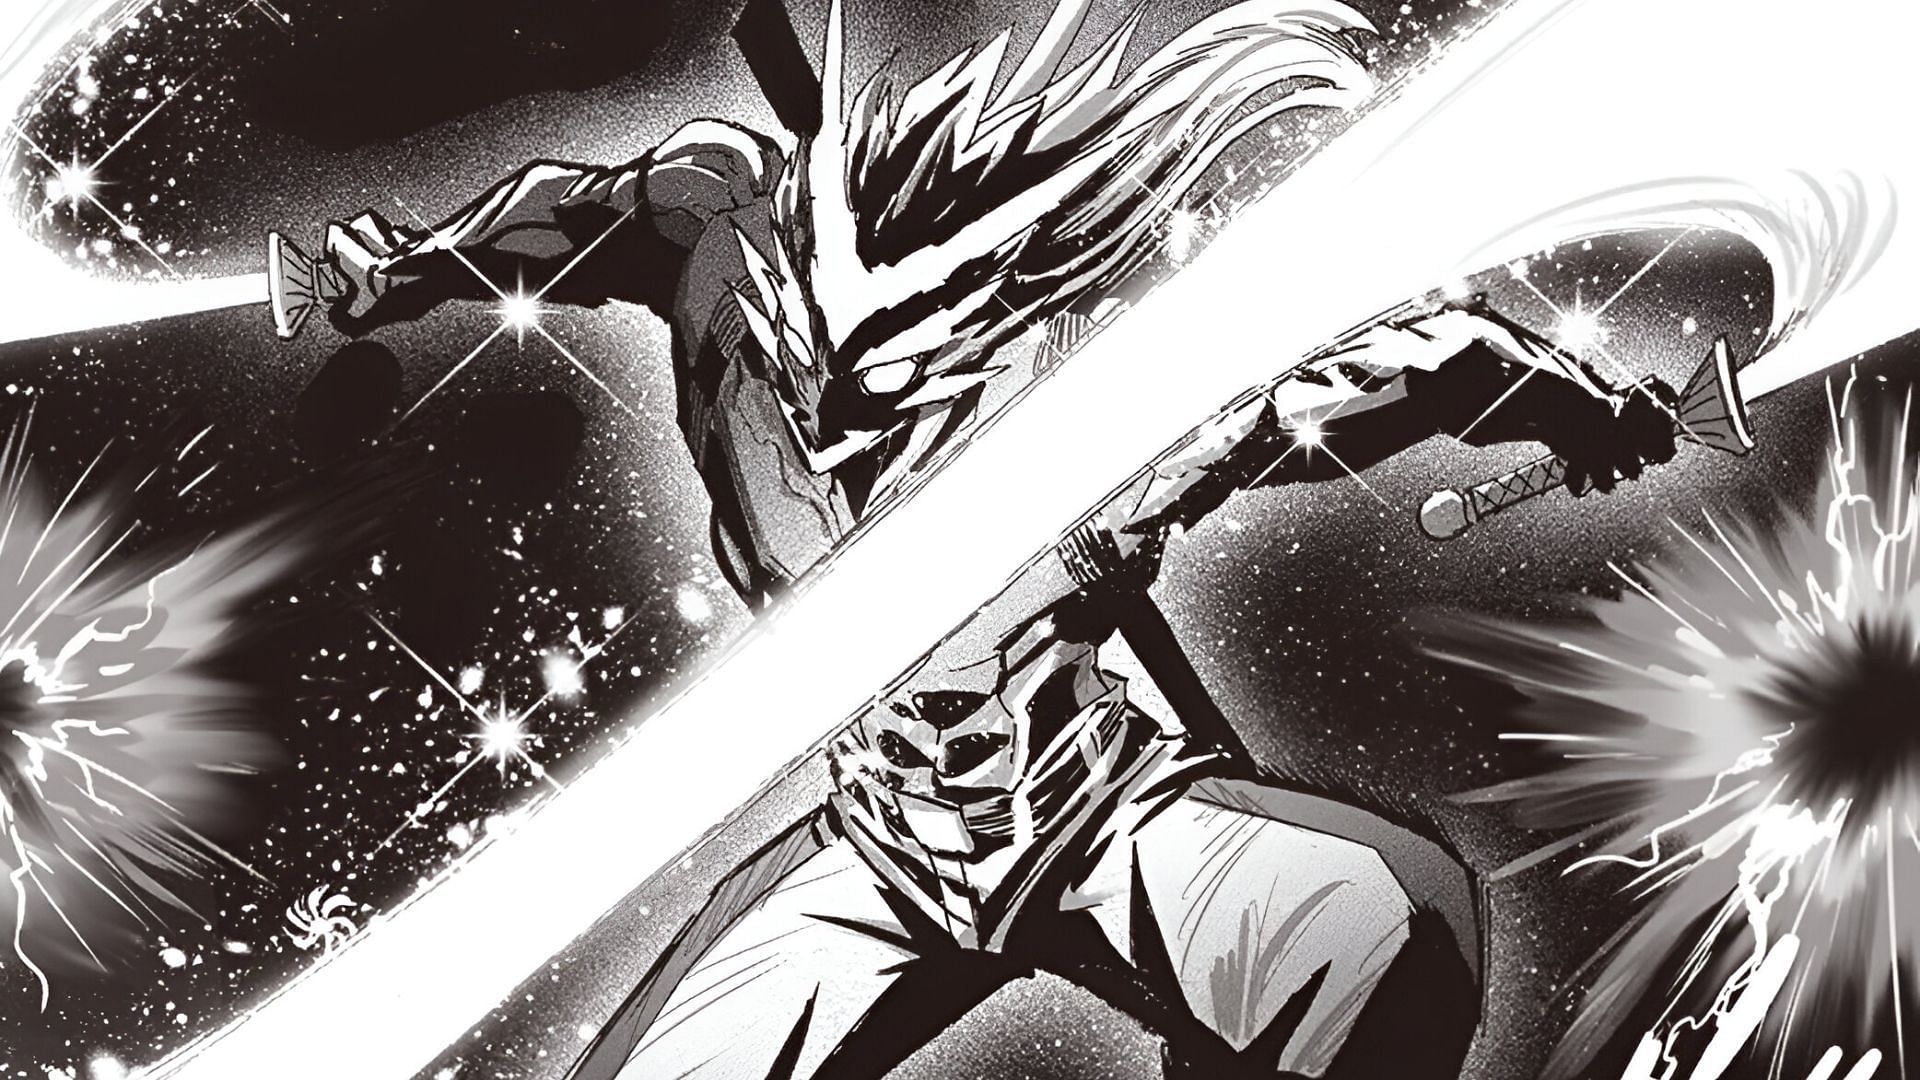 Empty Void as seen in One Punch Man manga (Image via Shueisha)